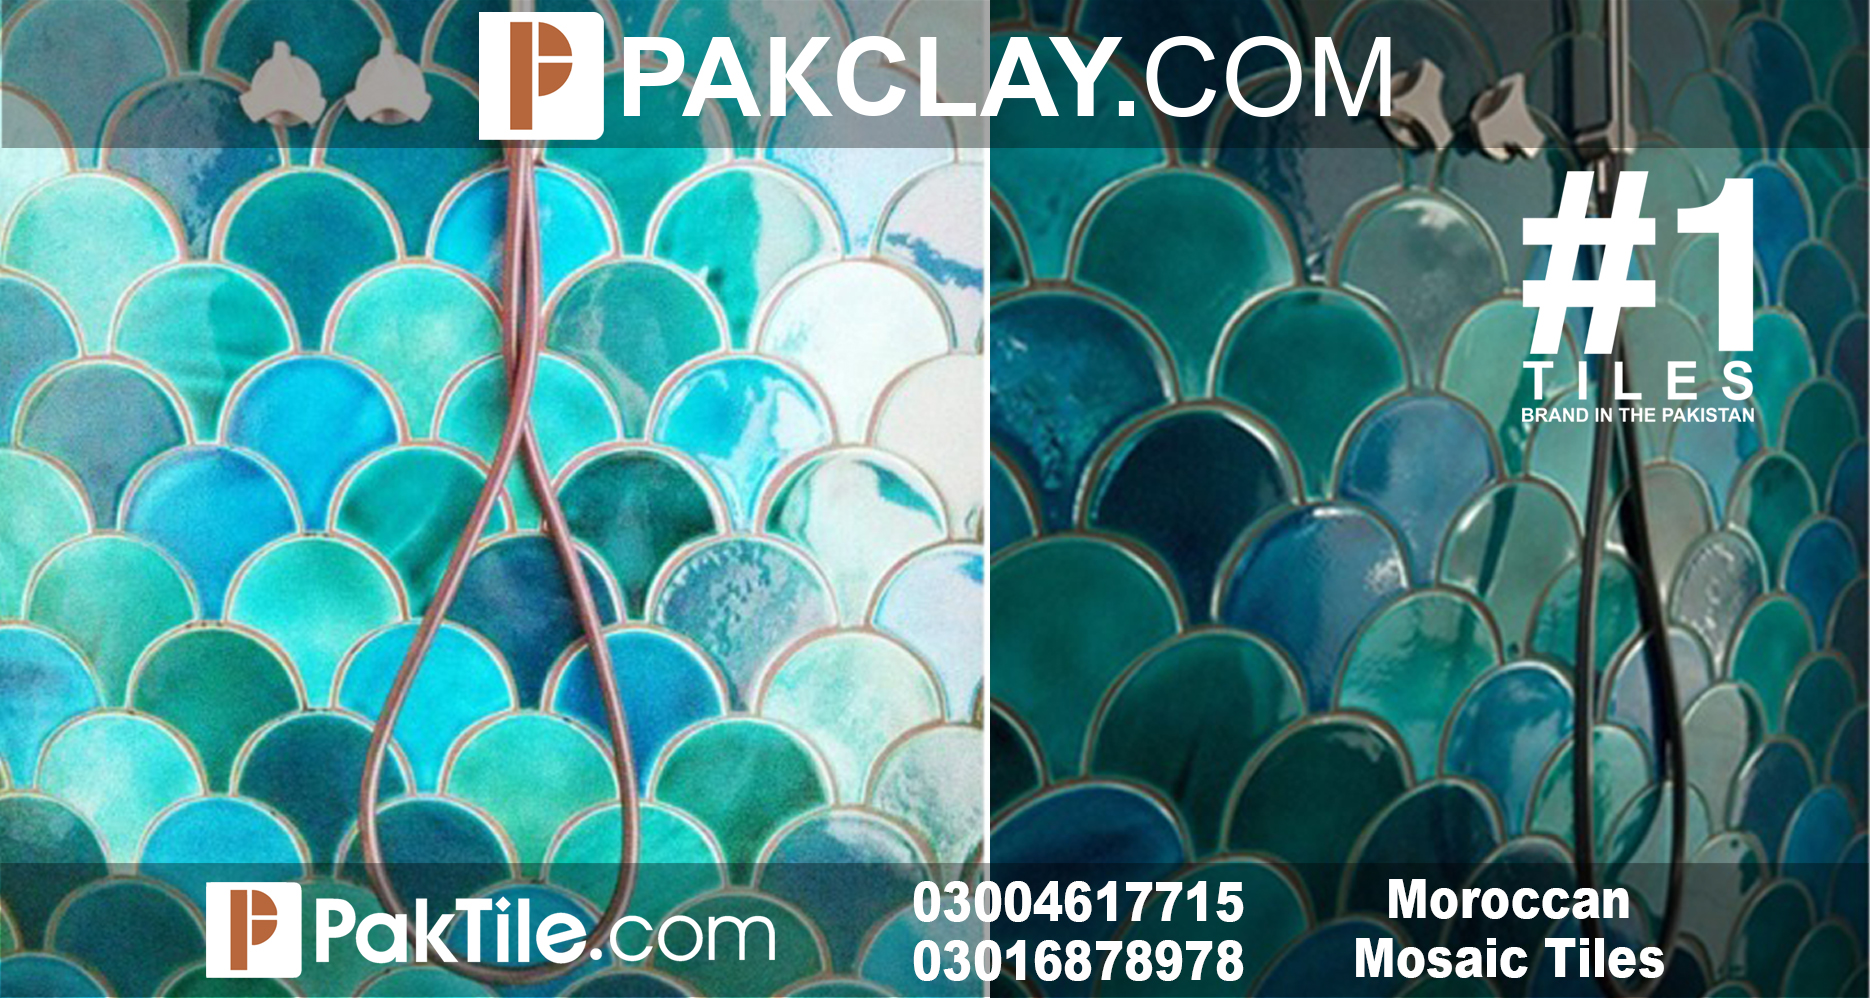 Ceramic Tiles Design for Wall in Pakistan